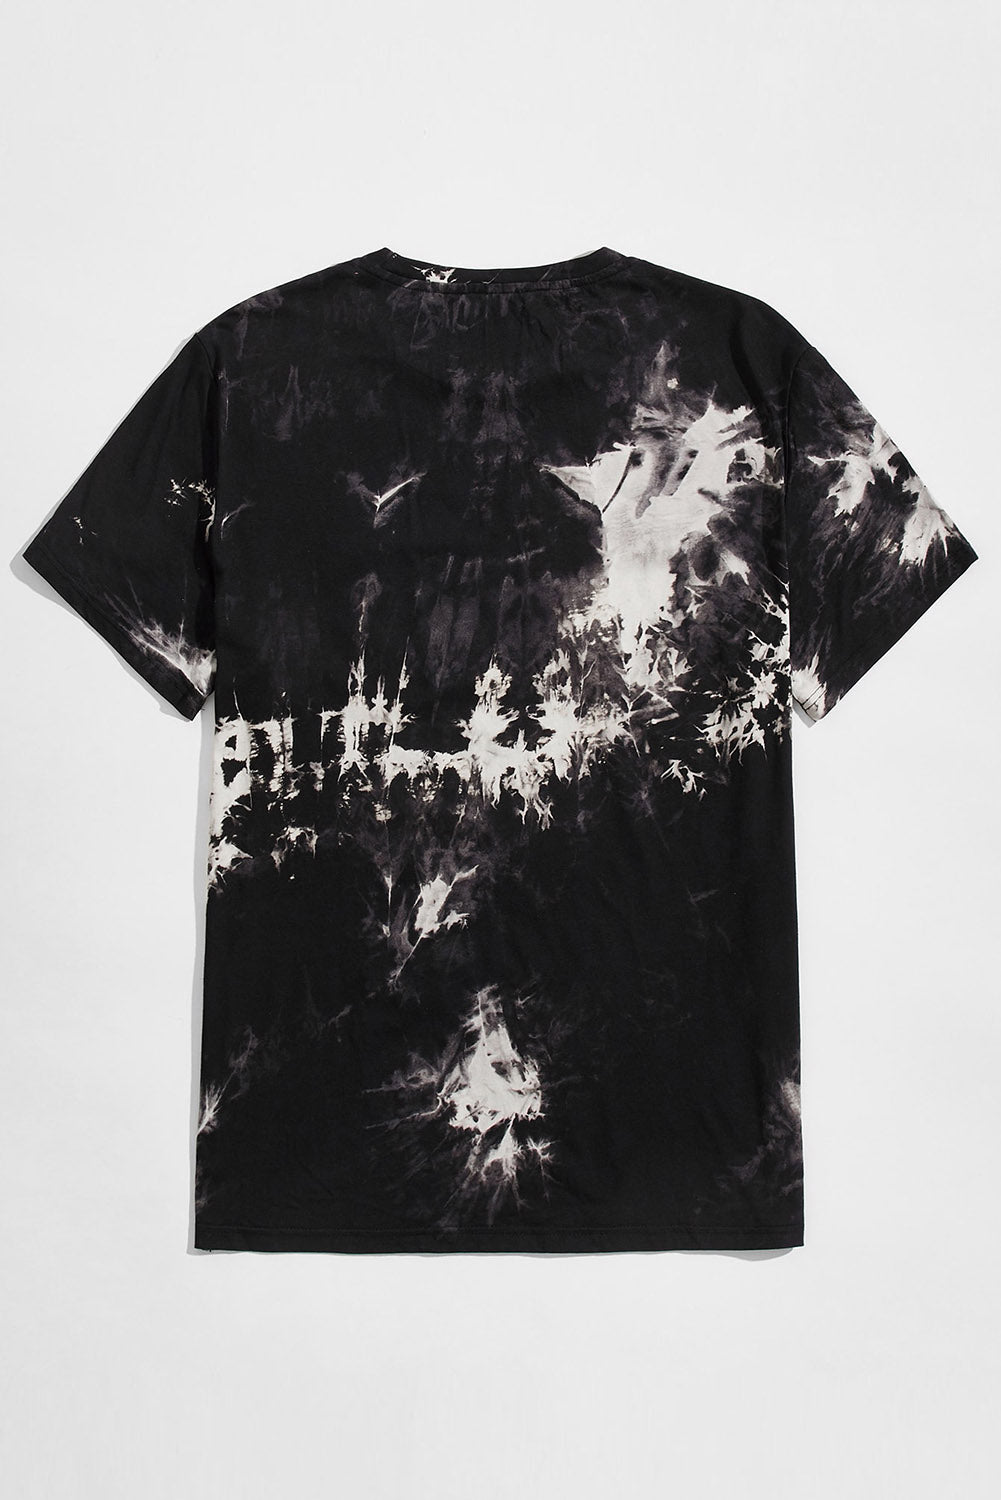 Black LOS ANGELES Tie Dyed Print Short Sleeve Men's T-shirt Men's Tops JT's Designer Fashion